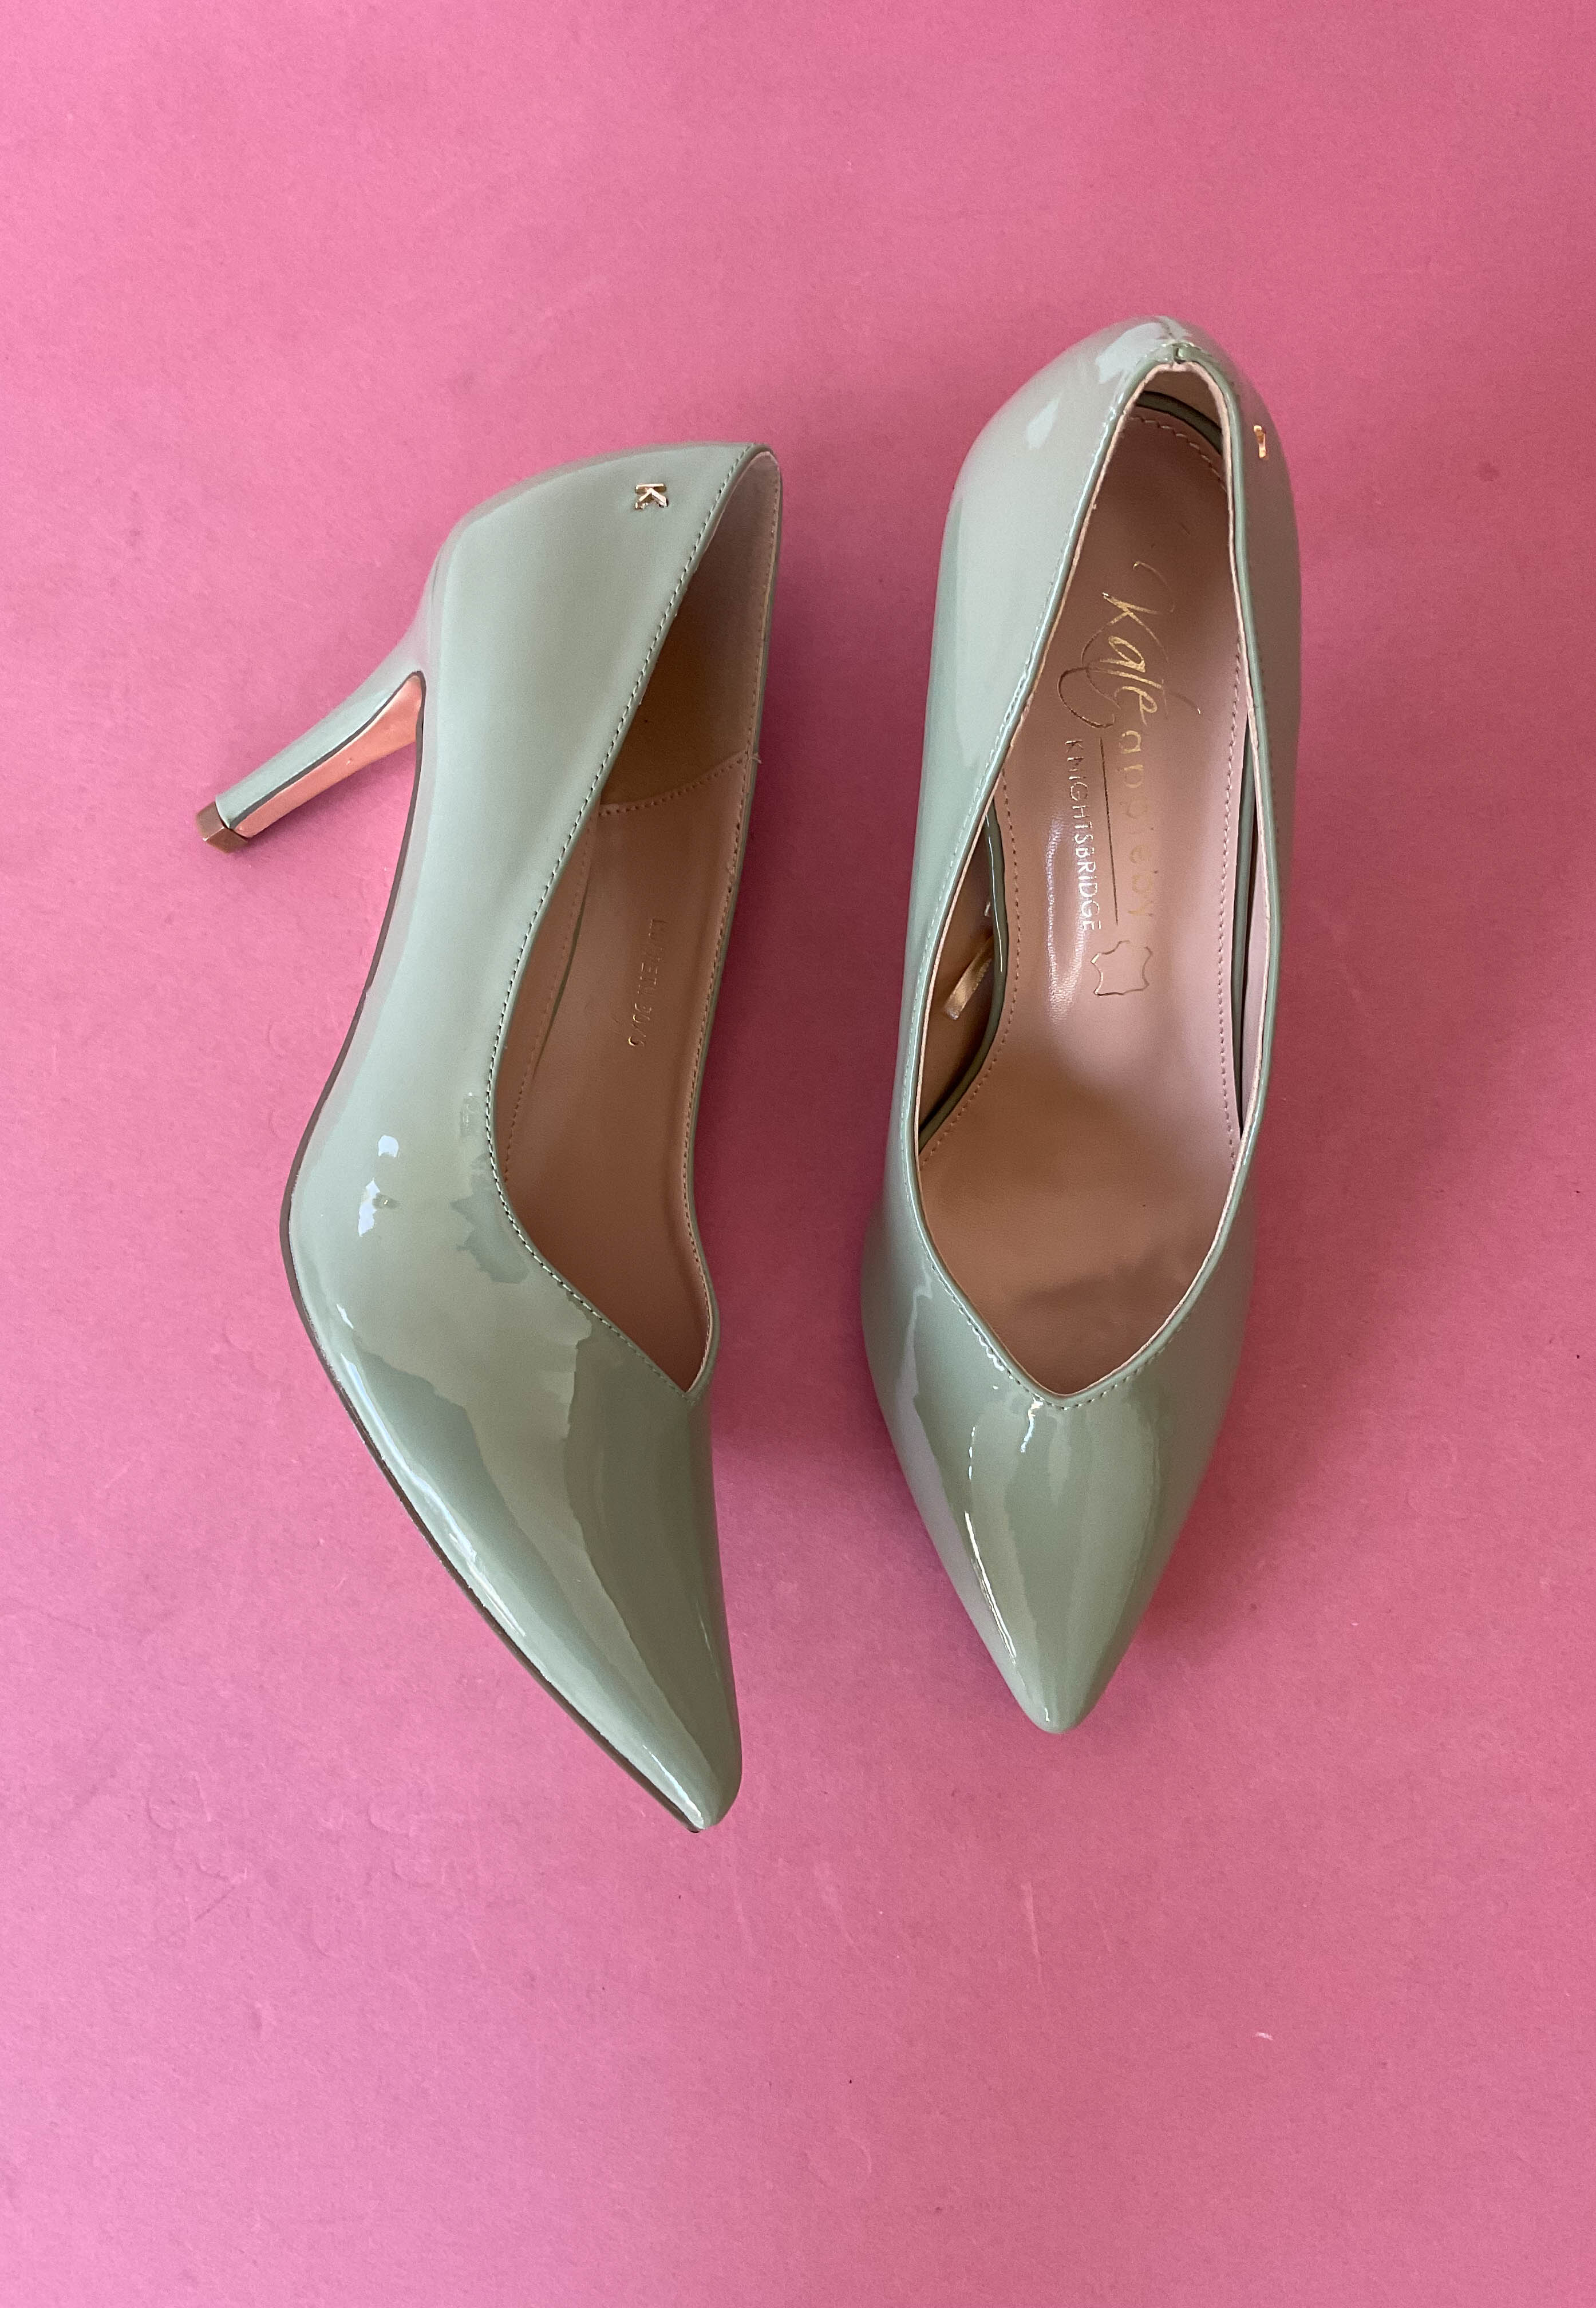 Kate appleby green 3 inch heels